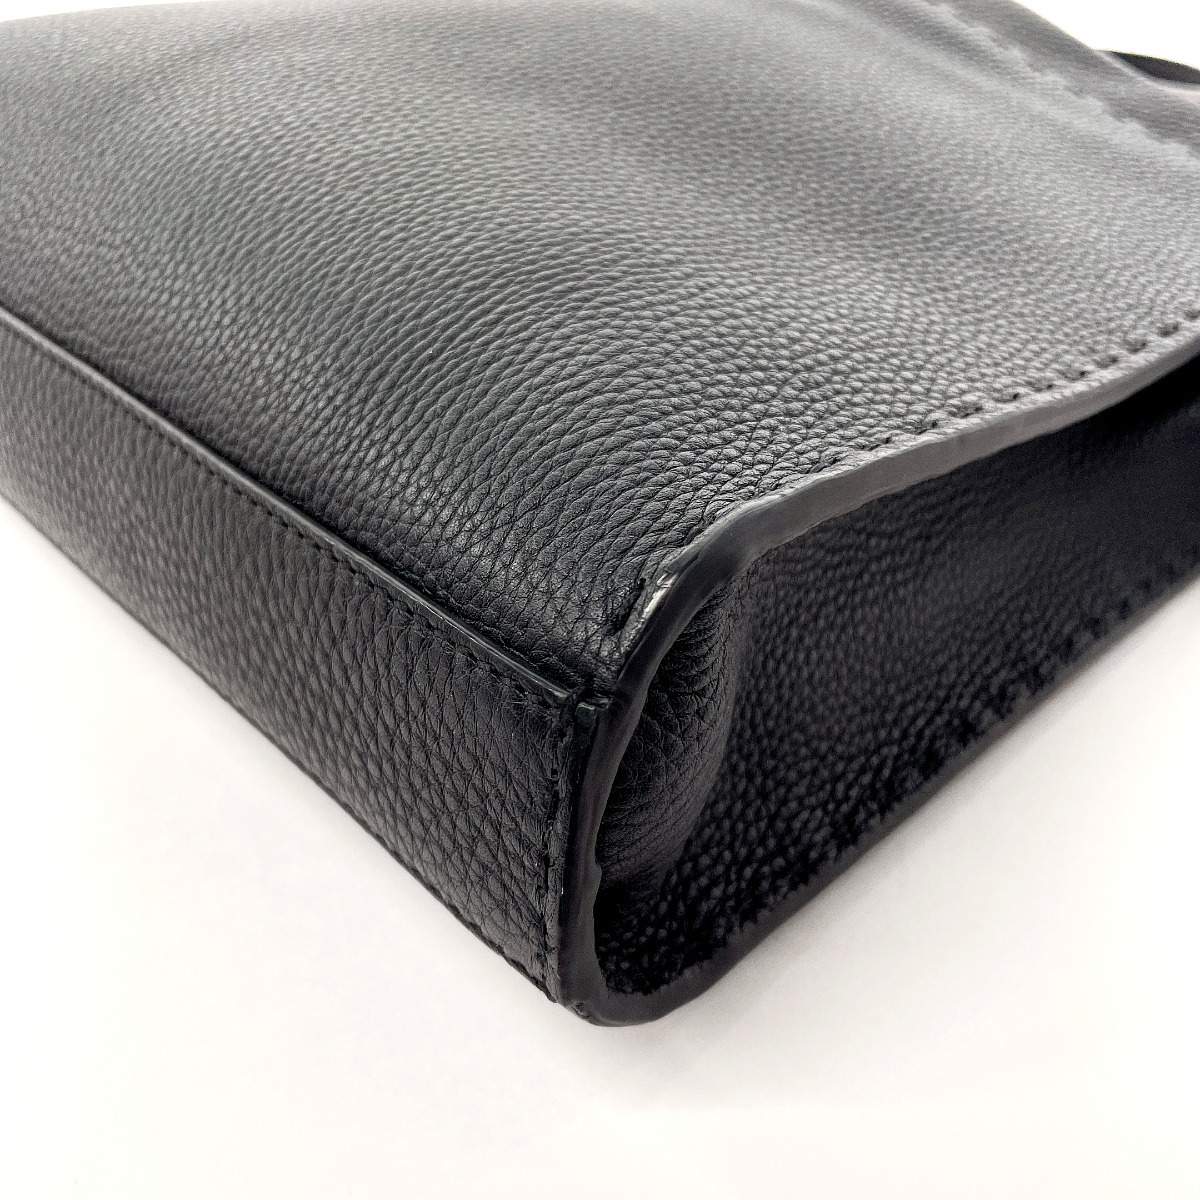  Fendi FENDI business bag document bag commuting bag 7VA406-8KL selection rear pi- Cub - Monstar I leather black 